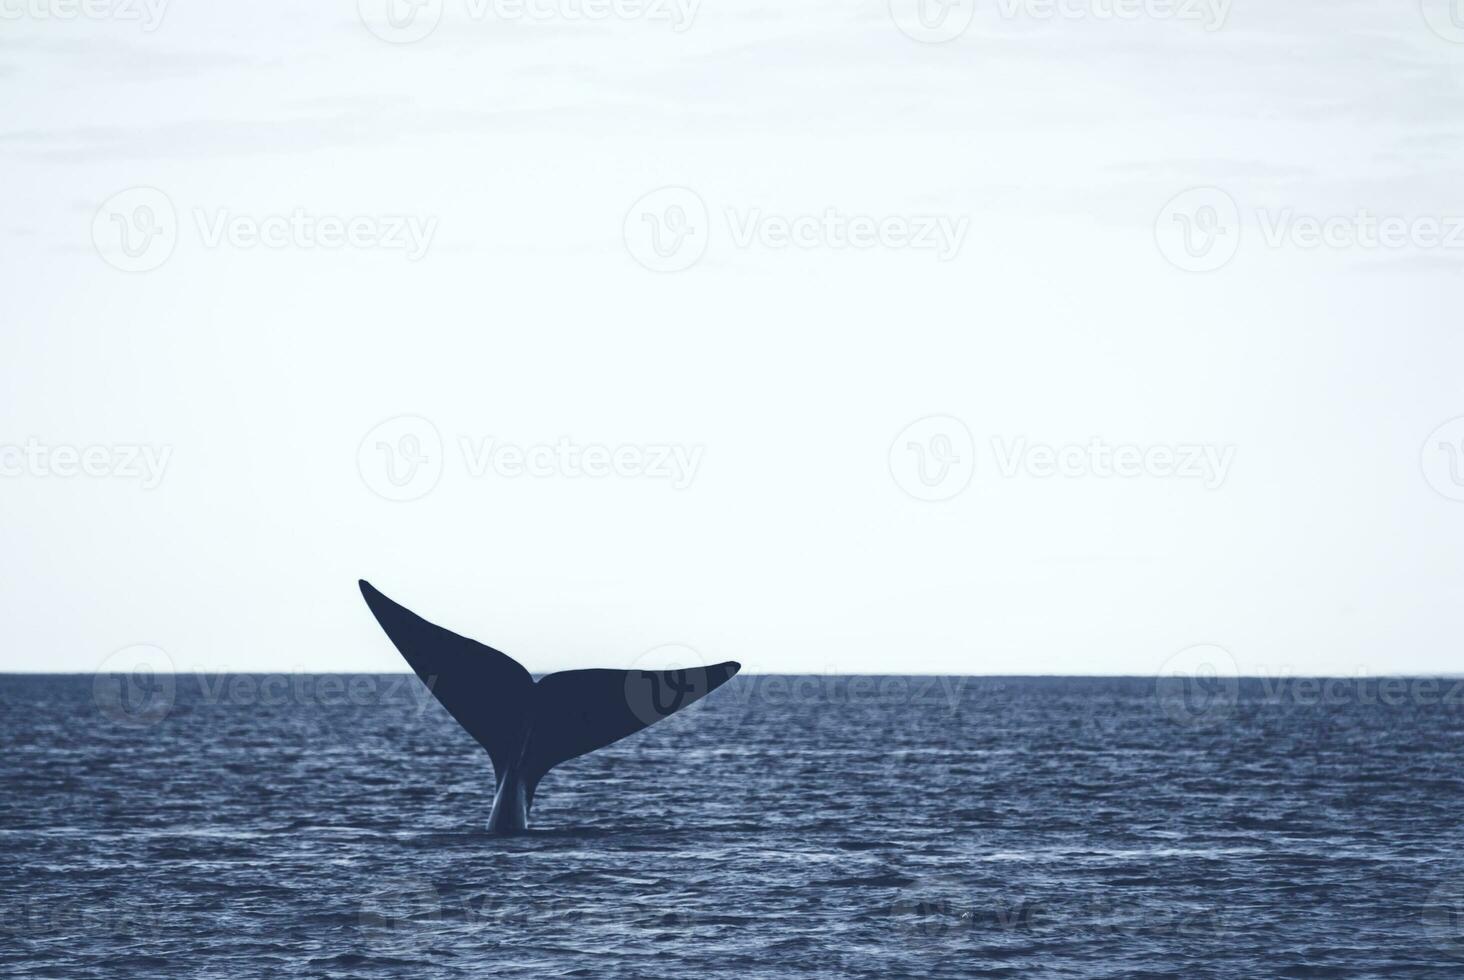 ballena cola fuera de agua, península valdés,patagonia,argentina. foto